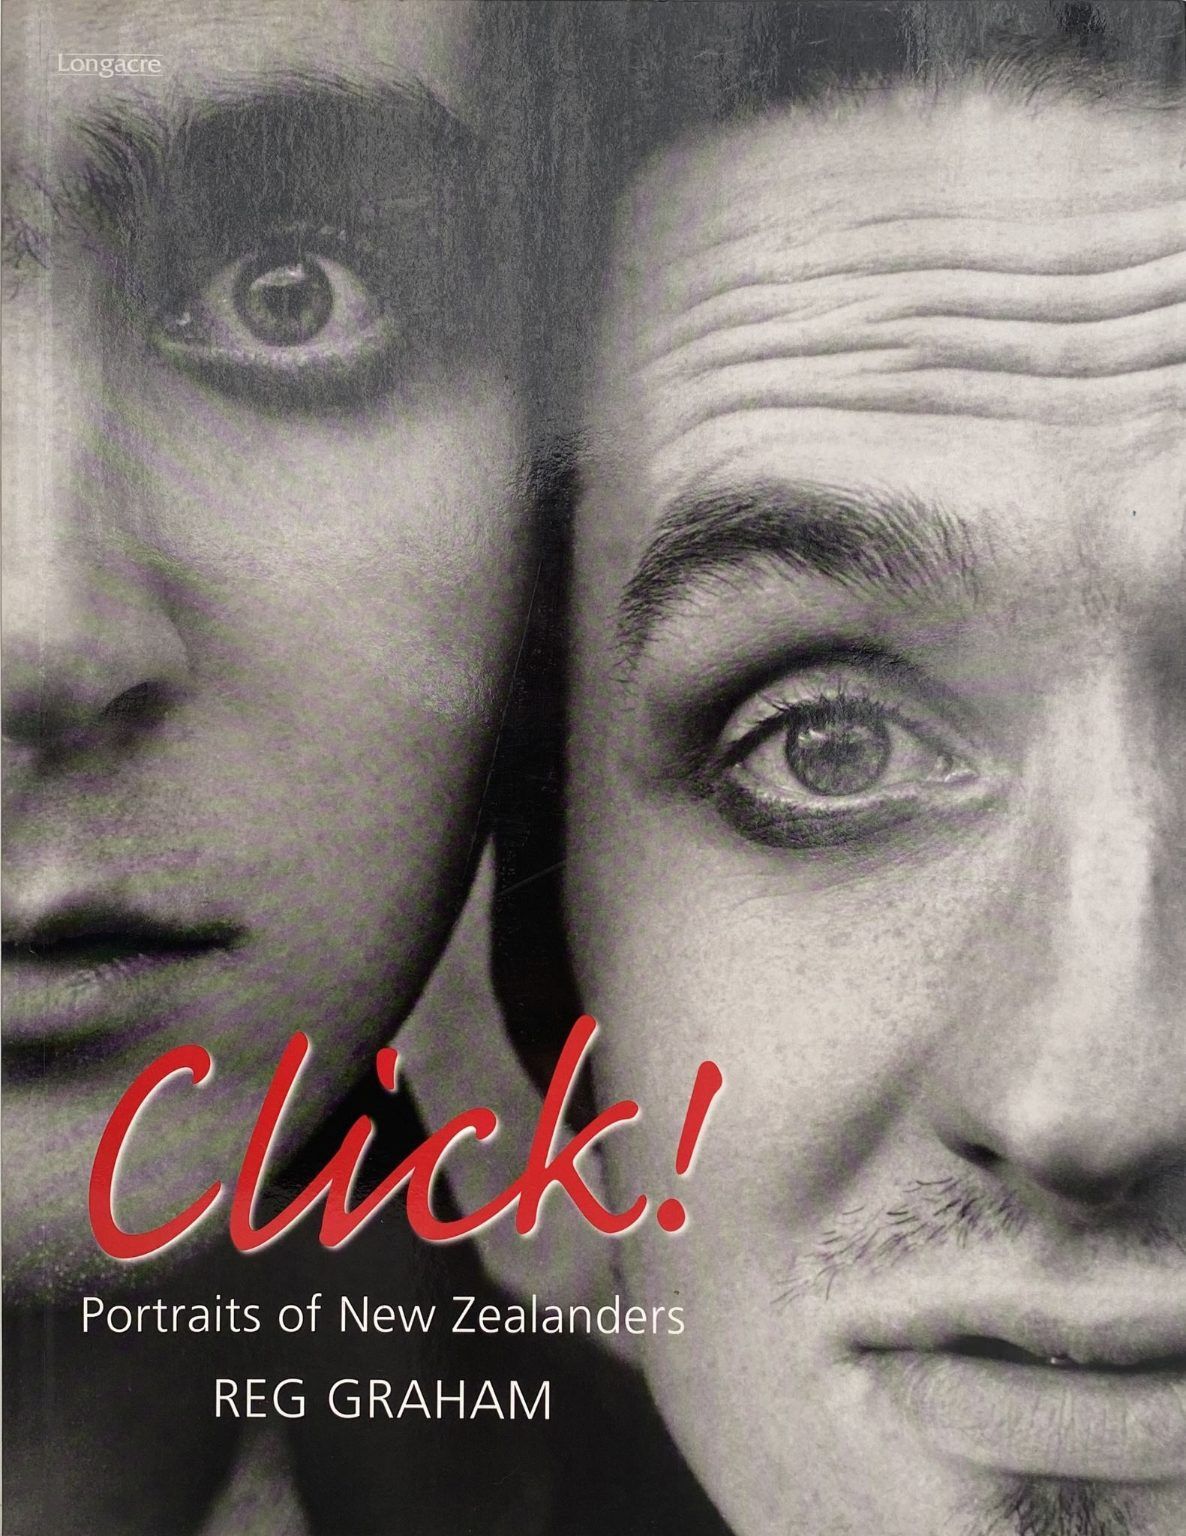 CLICK! Portraits of New Zealanders by Reg Graham